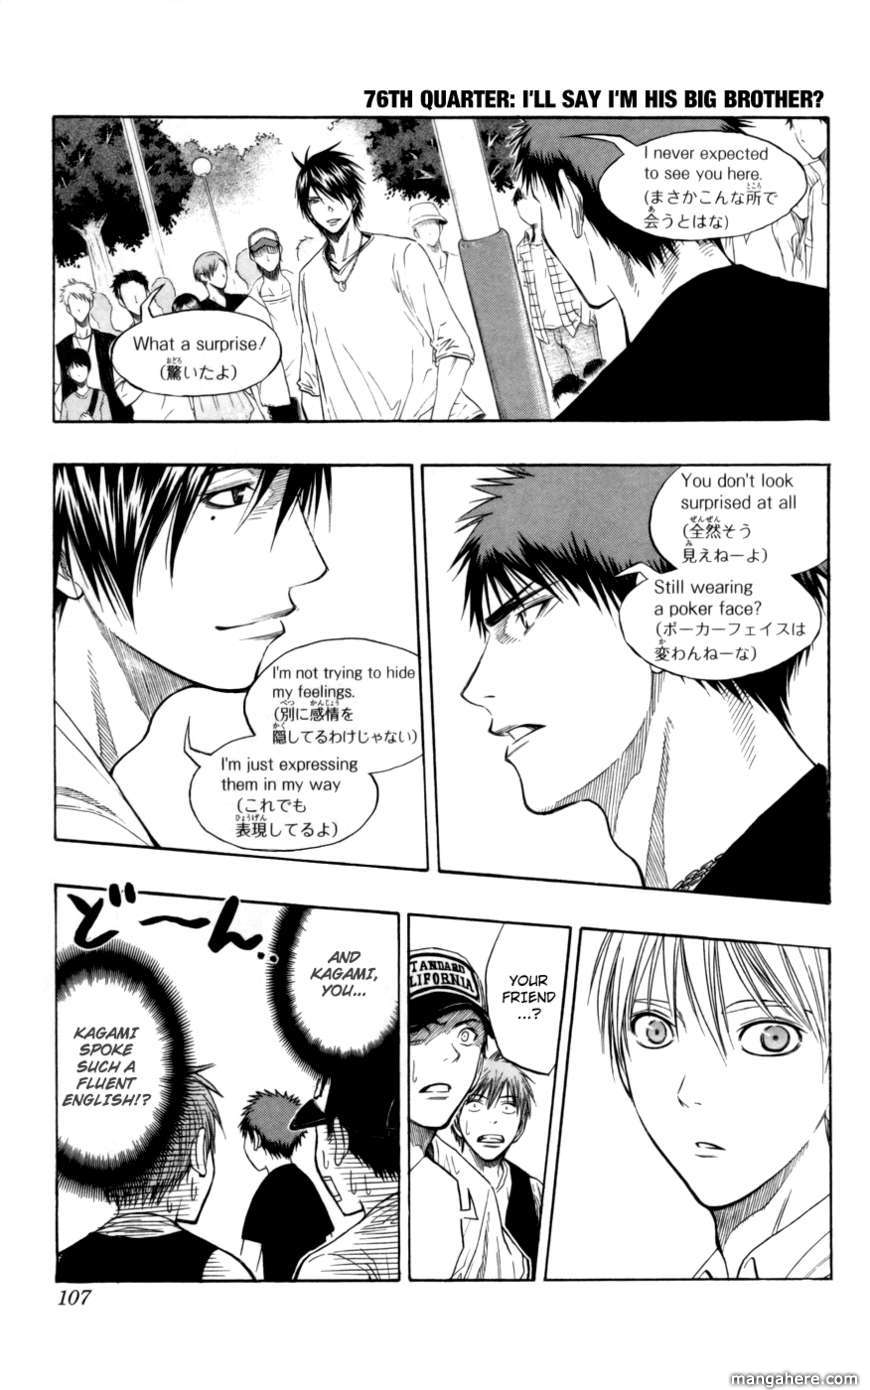 Kuroko No Basket Vol.09 Chapter 076 : I'll Say I'm His Big Brother? - Picture 1